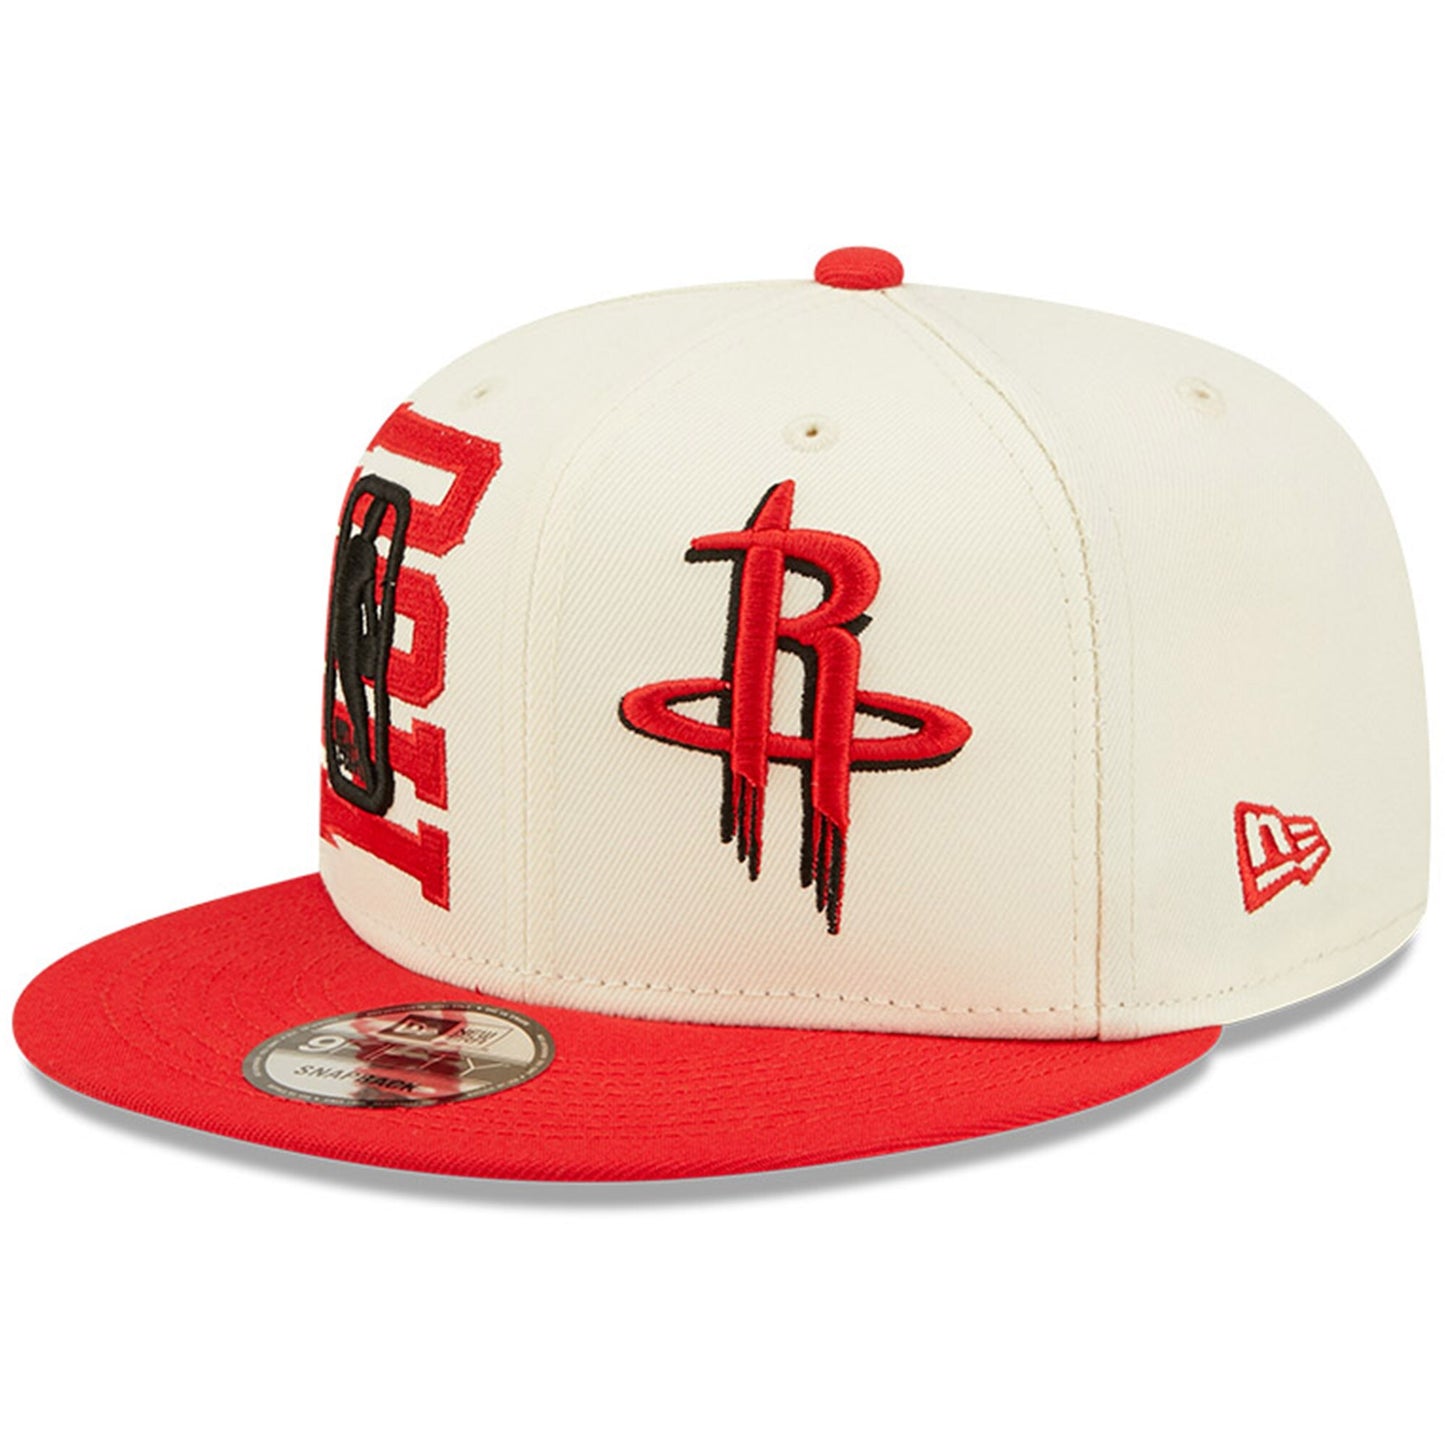 Houston Rockets New Era 2022 NBA Draft 9FIFTY Snapback Adjustable Hat - Cream/Red